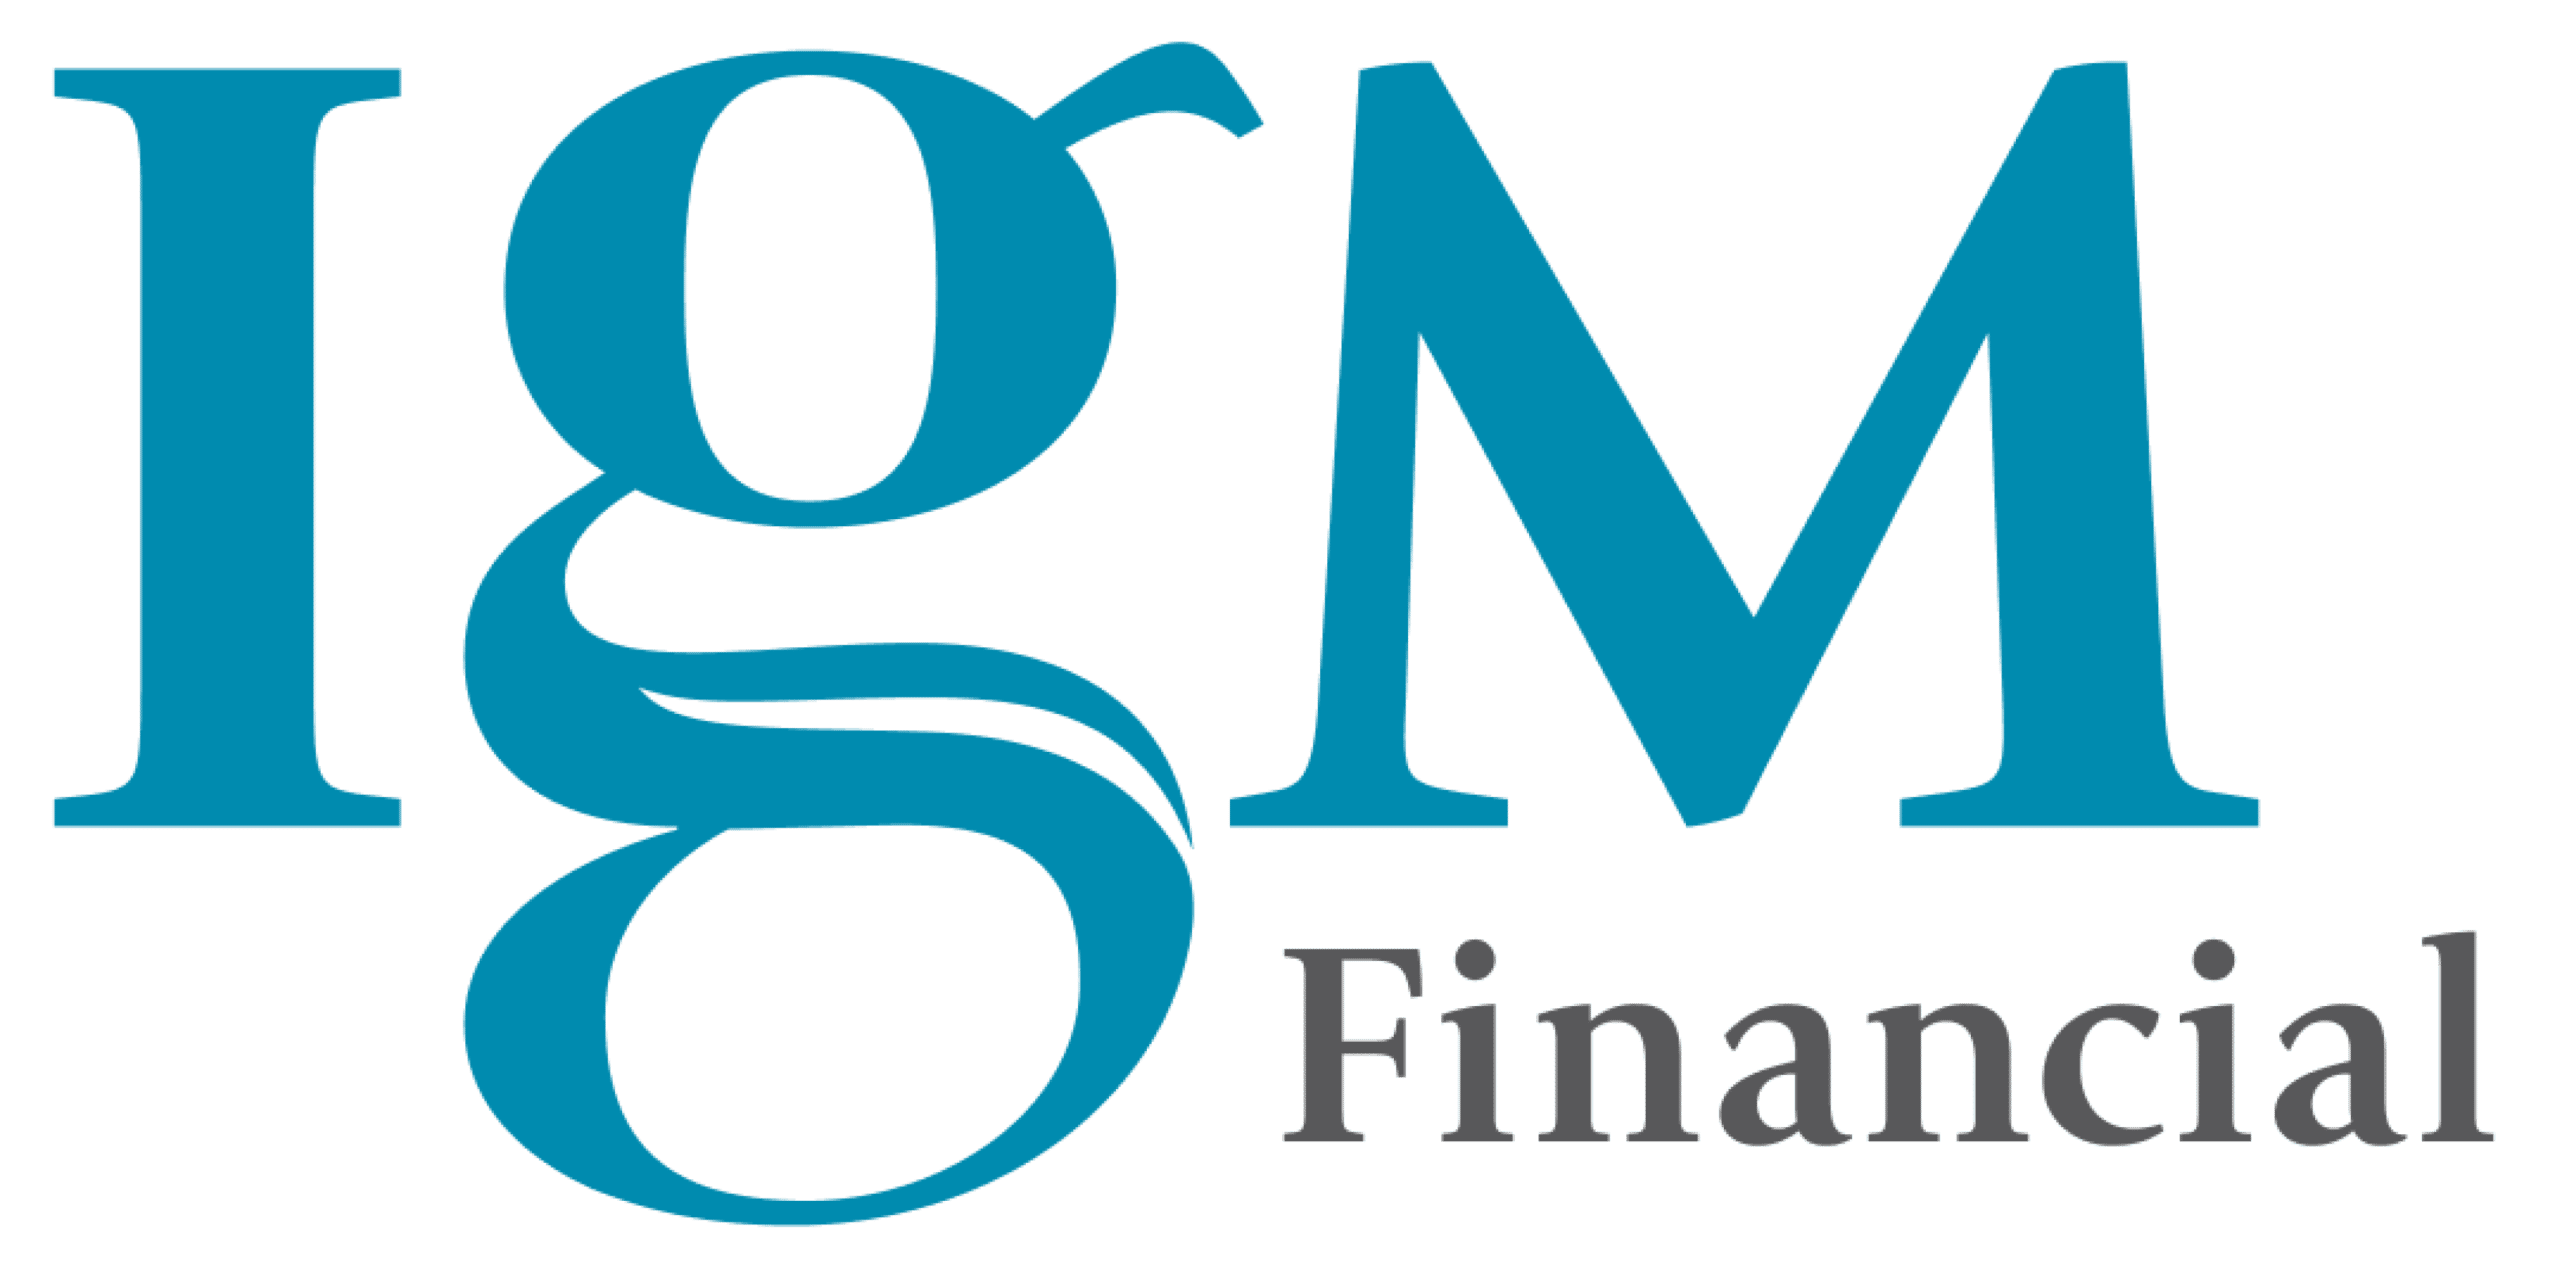 IGM Financial Logo